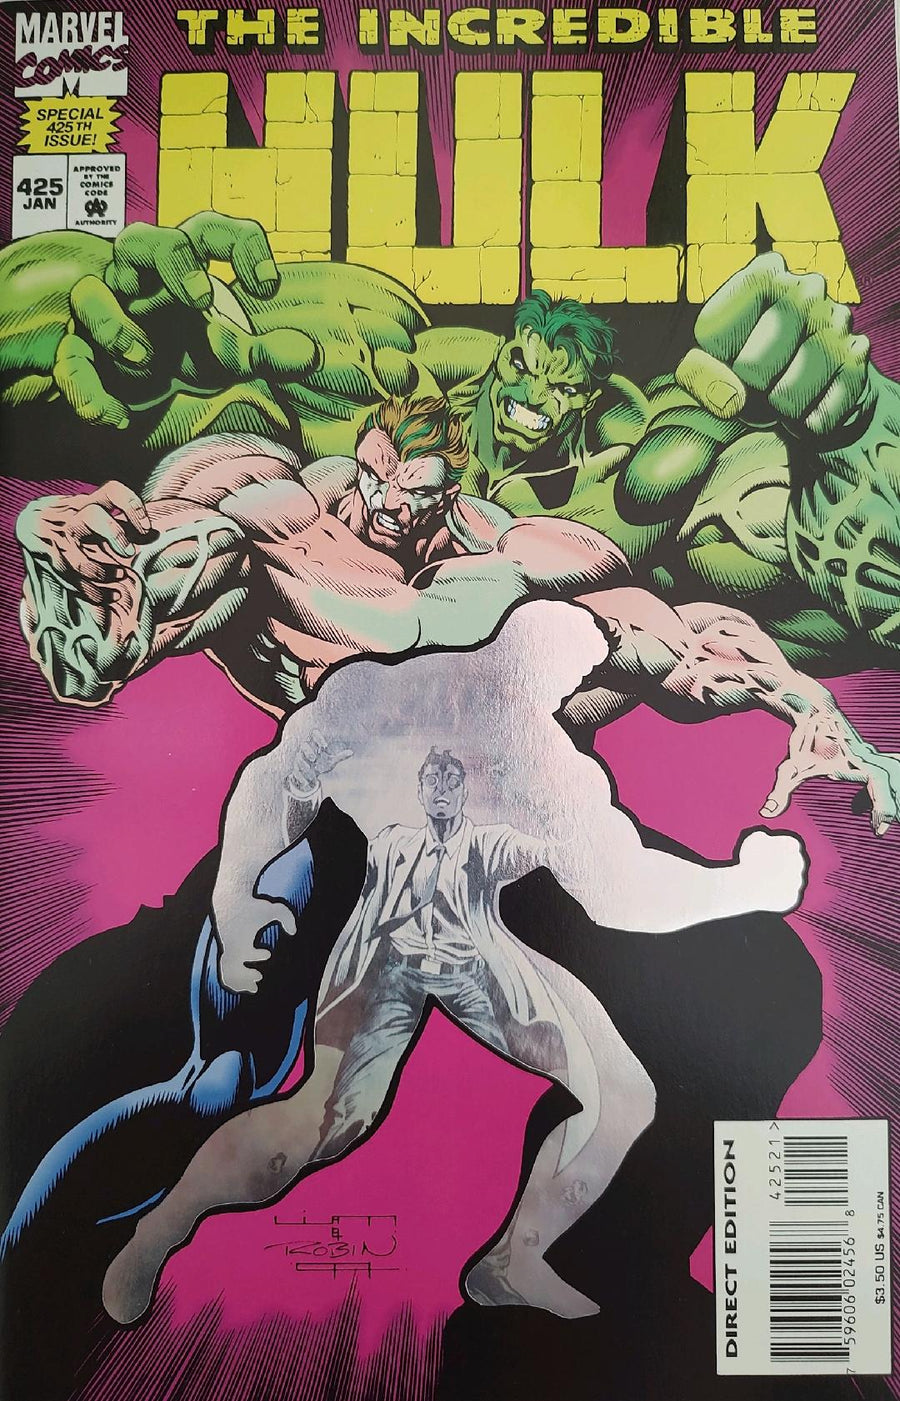 The Incredible Hulk #425 Comic Book Cover